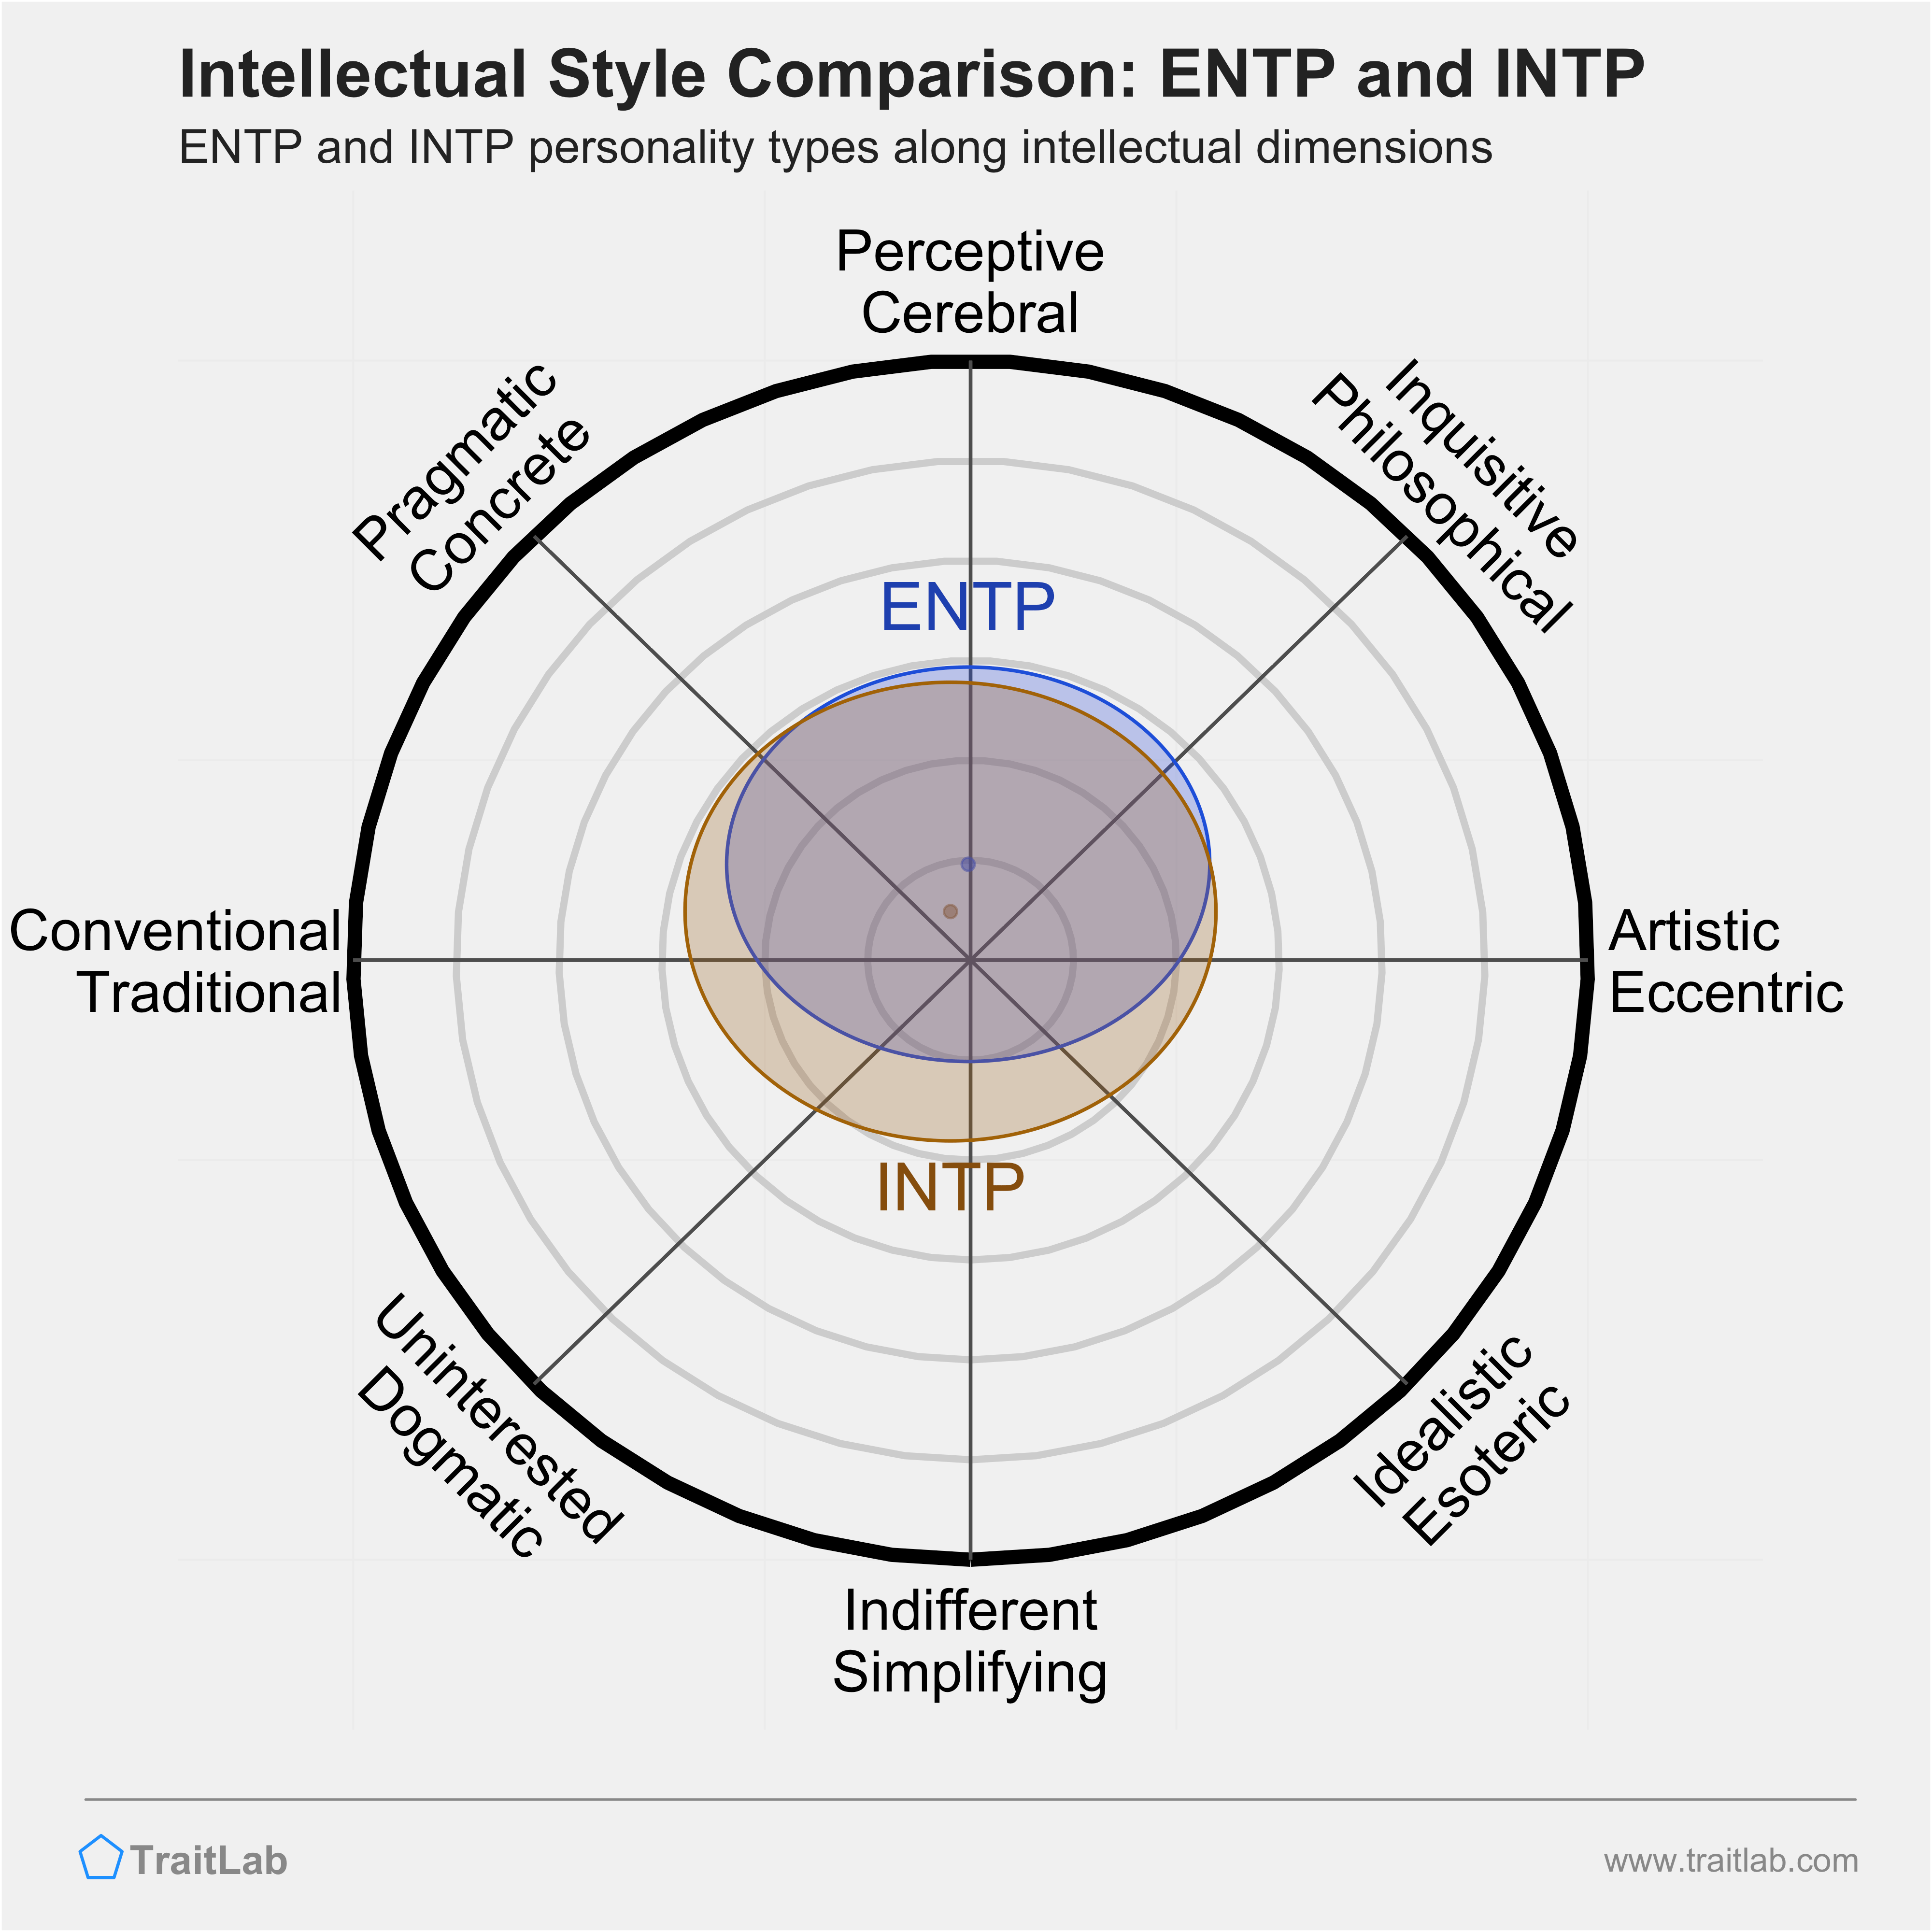 ENTP and INTP comparison across intellectual dimensions